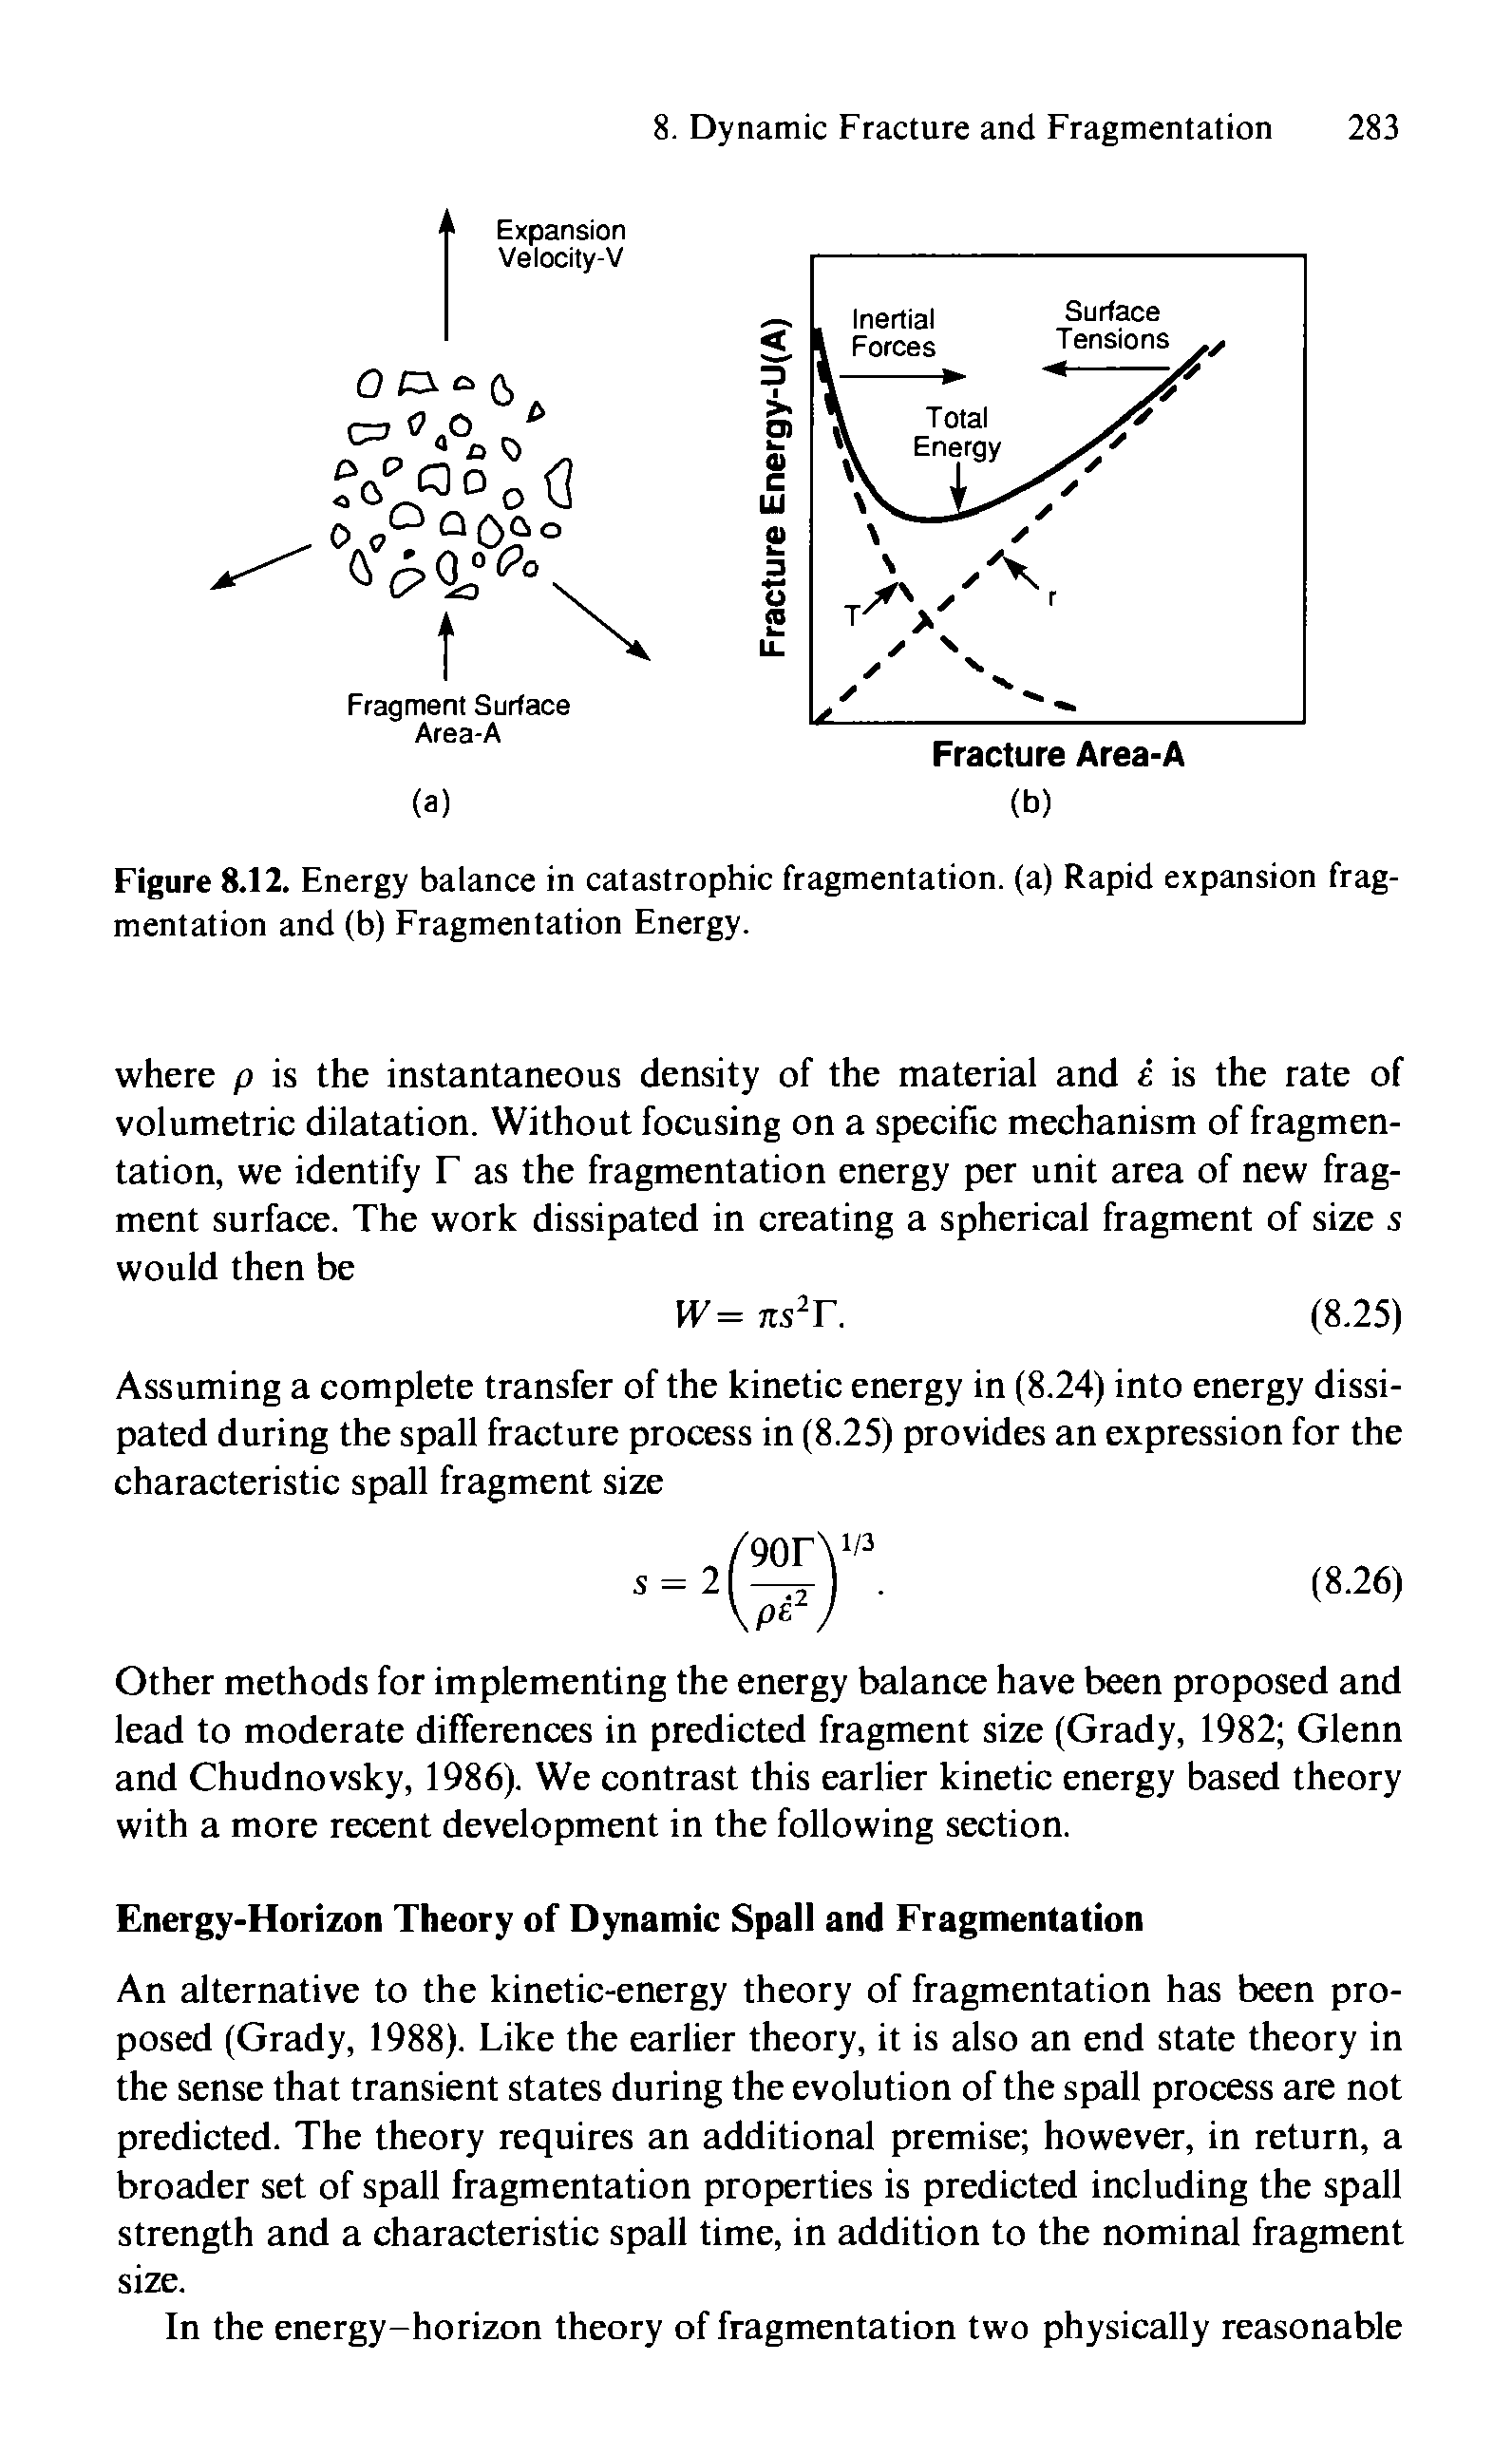 Figure 8.12. Energy balance in catastrophic fragmentation, (a) Rapid expansion fragmentation and (b) Fragmentation Energy.